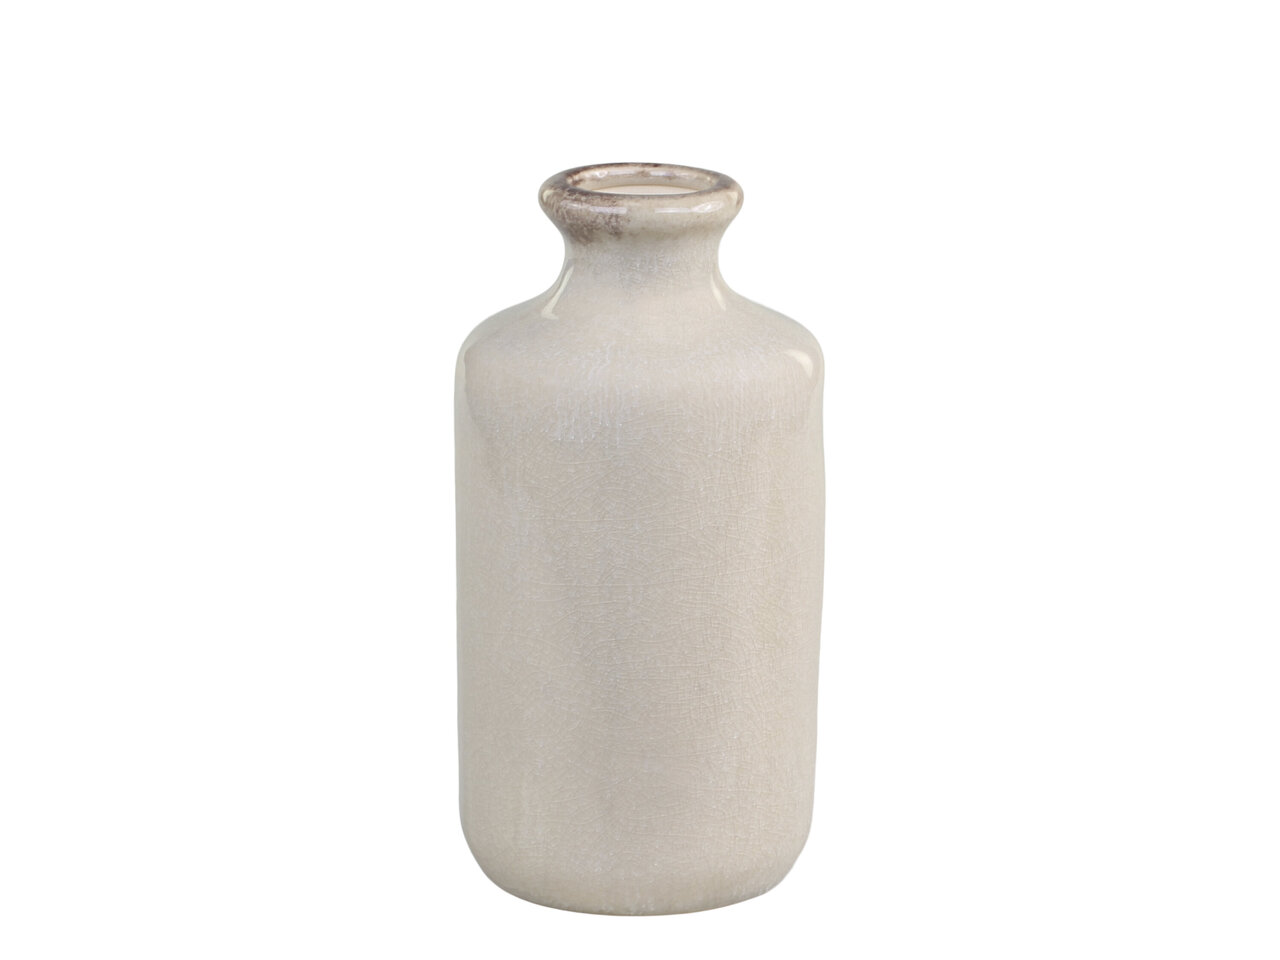 Chic Antique Niort Flasche aus Keramik Preview Image